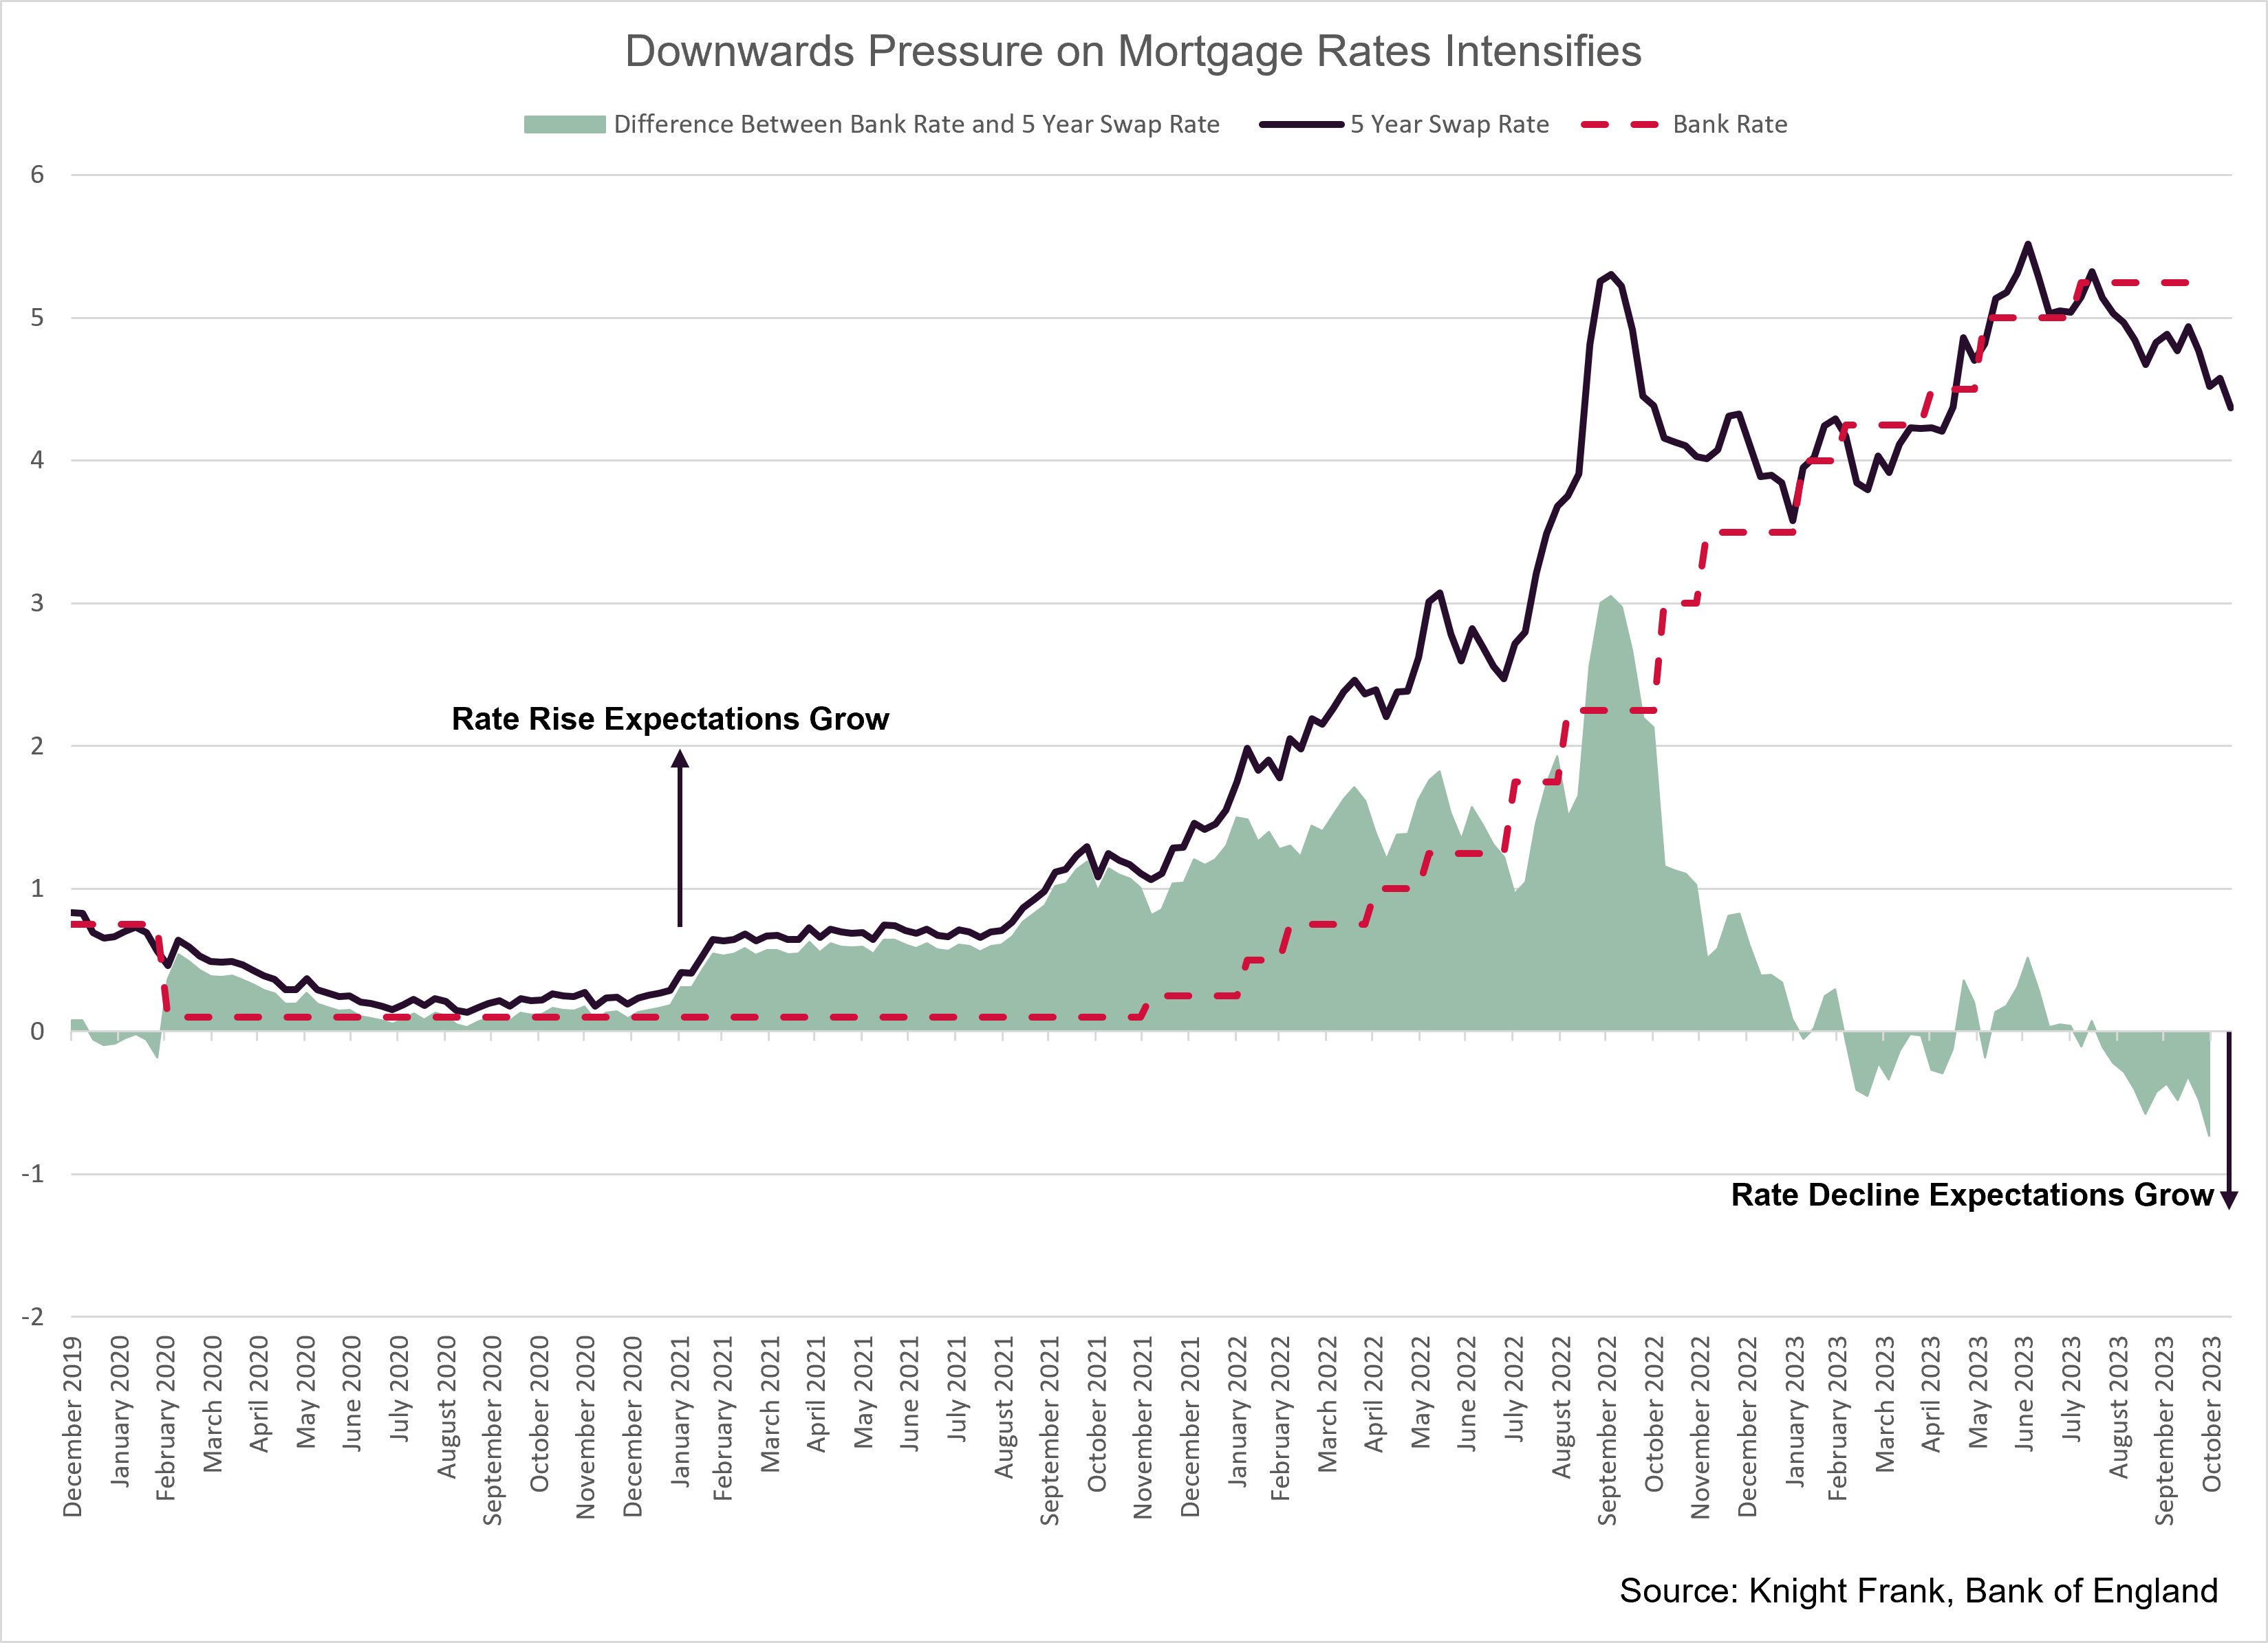 Downwards pressure on mortgage rates